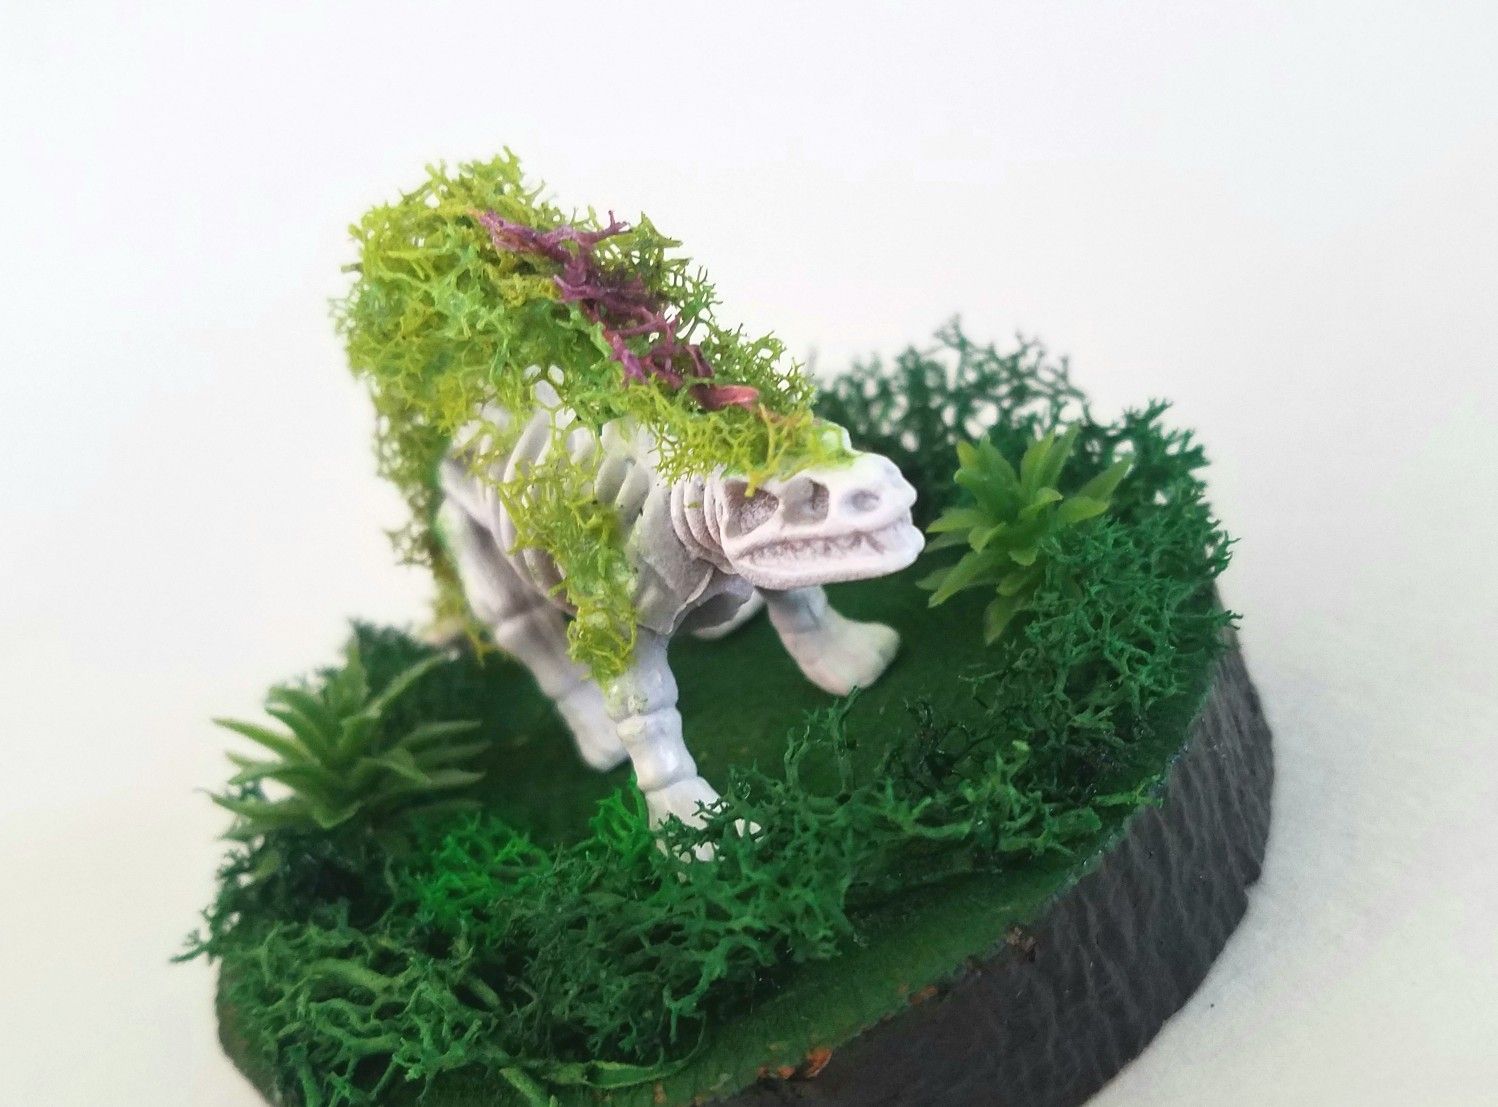 stegosaurus dinosaur display, art by Sherrie Thai of Shaireproductions.com